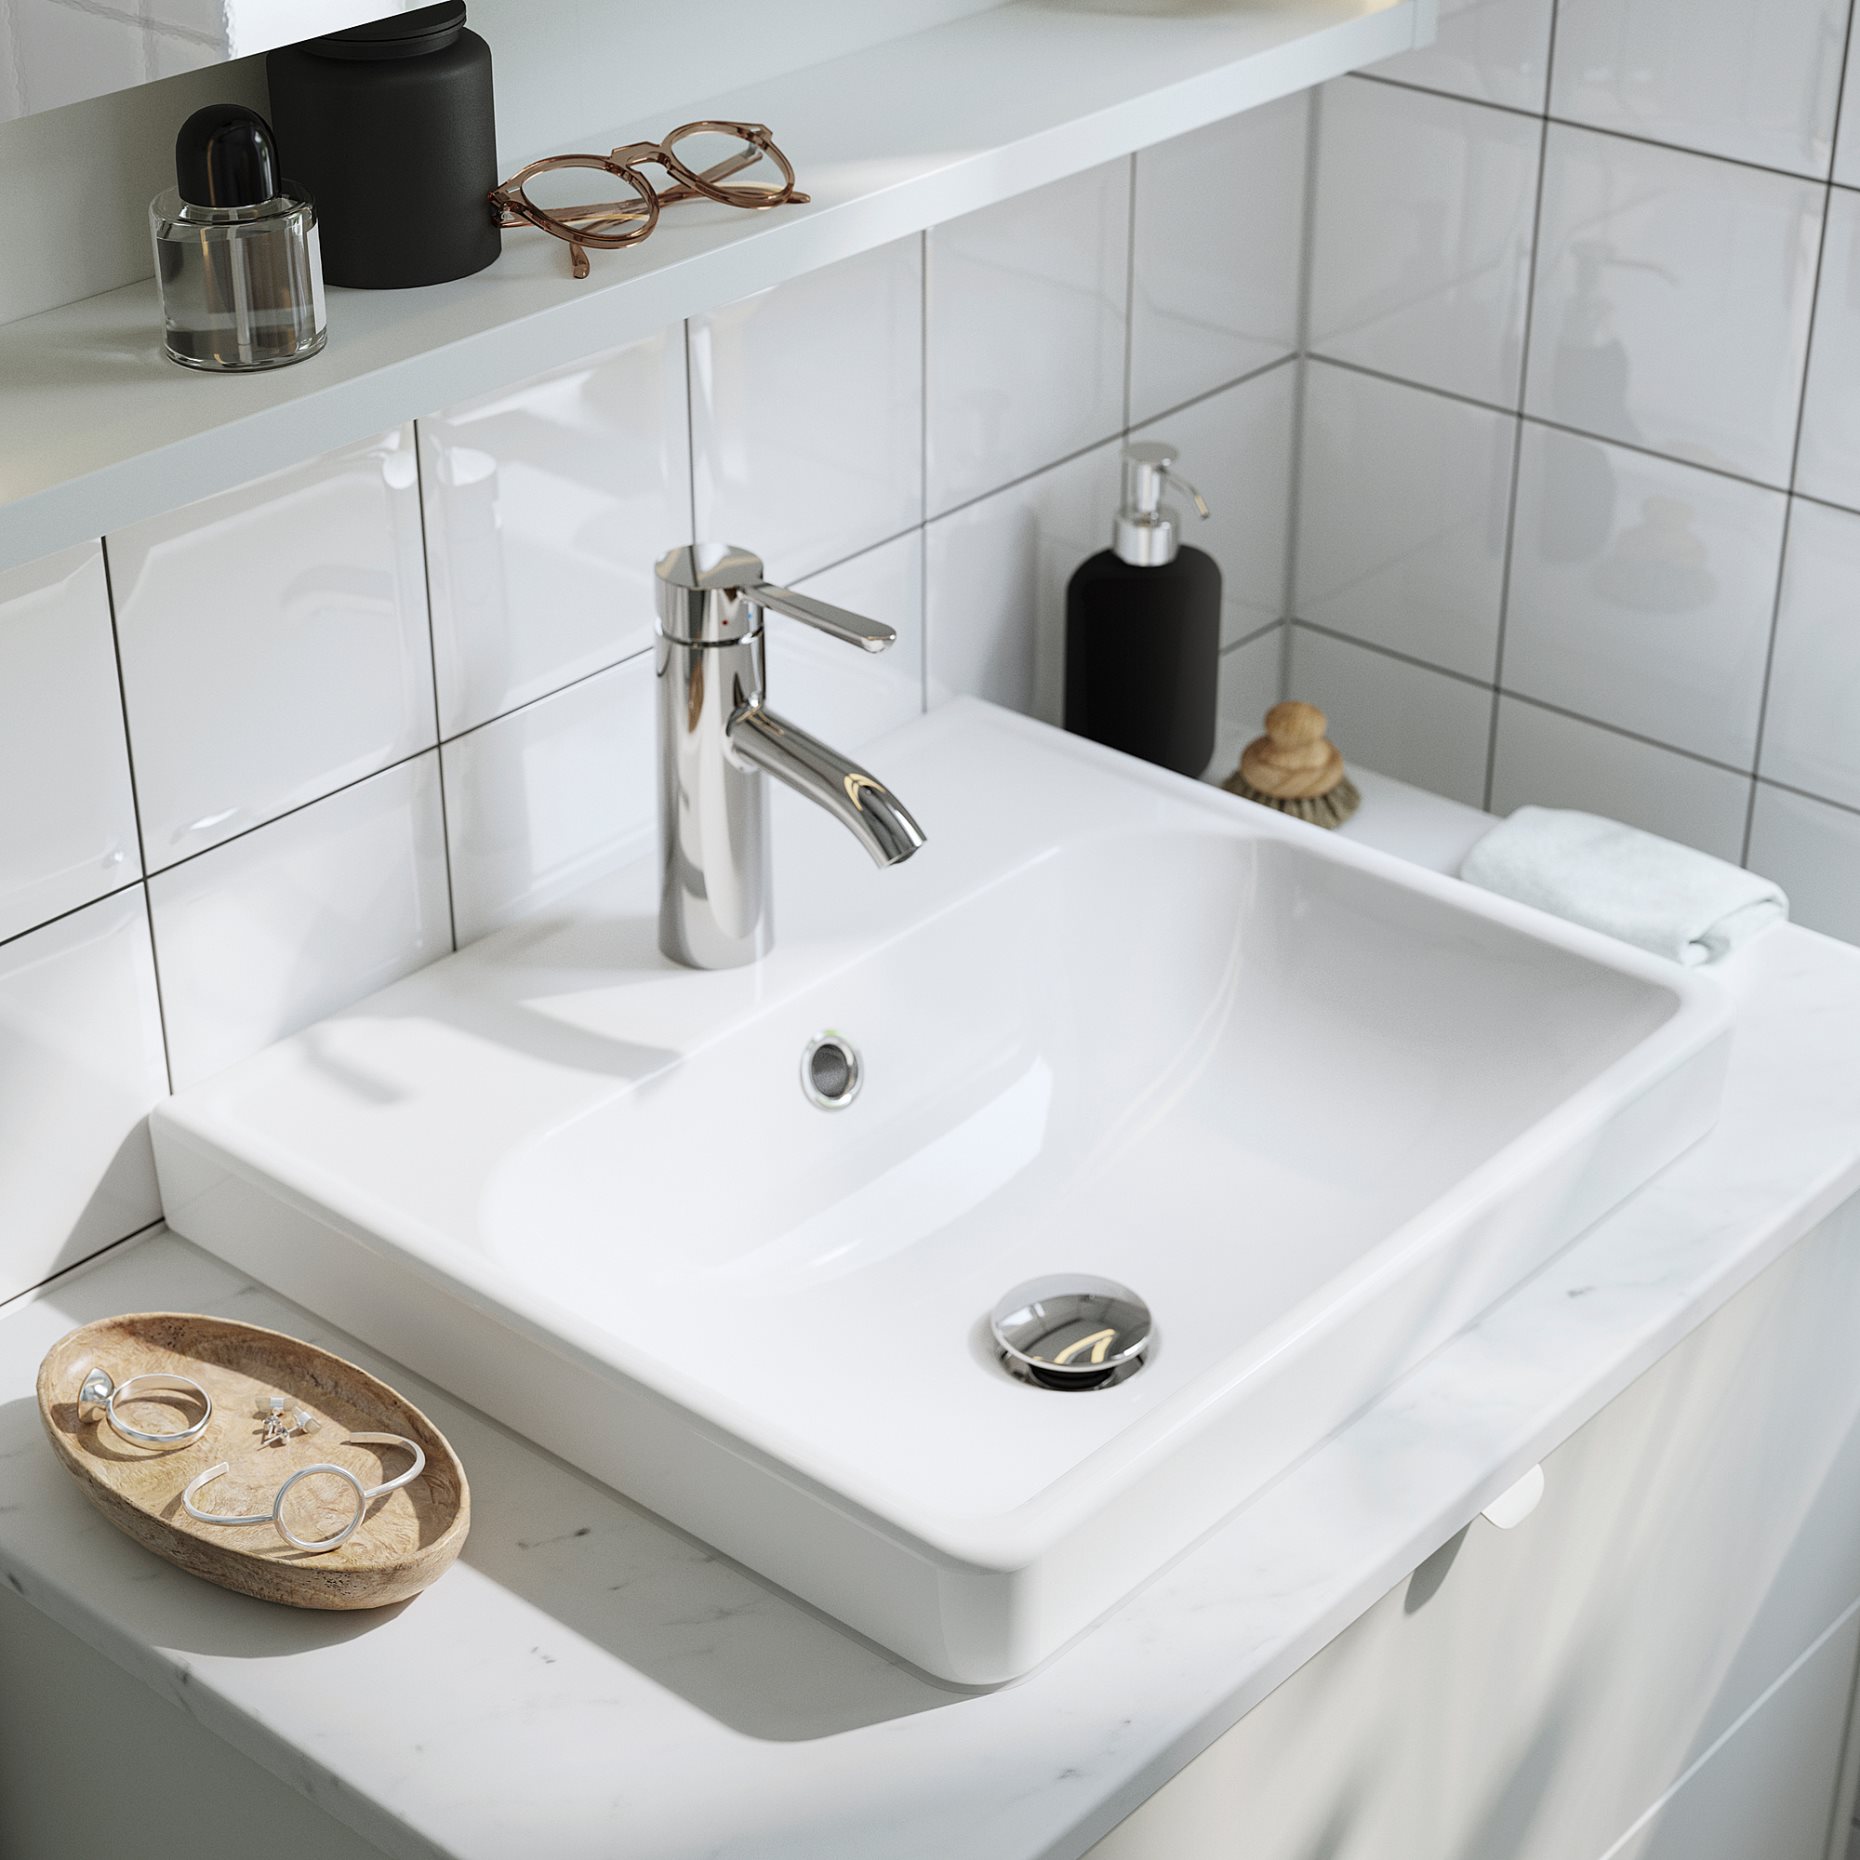 HAVBACK/ORRSJON, wash-stand with drawers/wash-basin/tap, 82x49x71 cm, 695.213.85